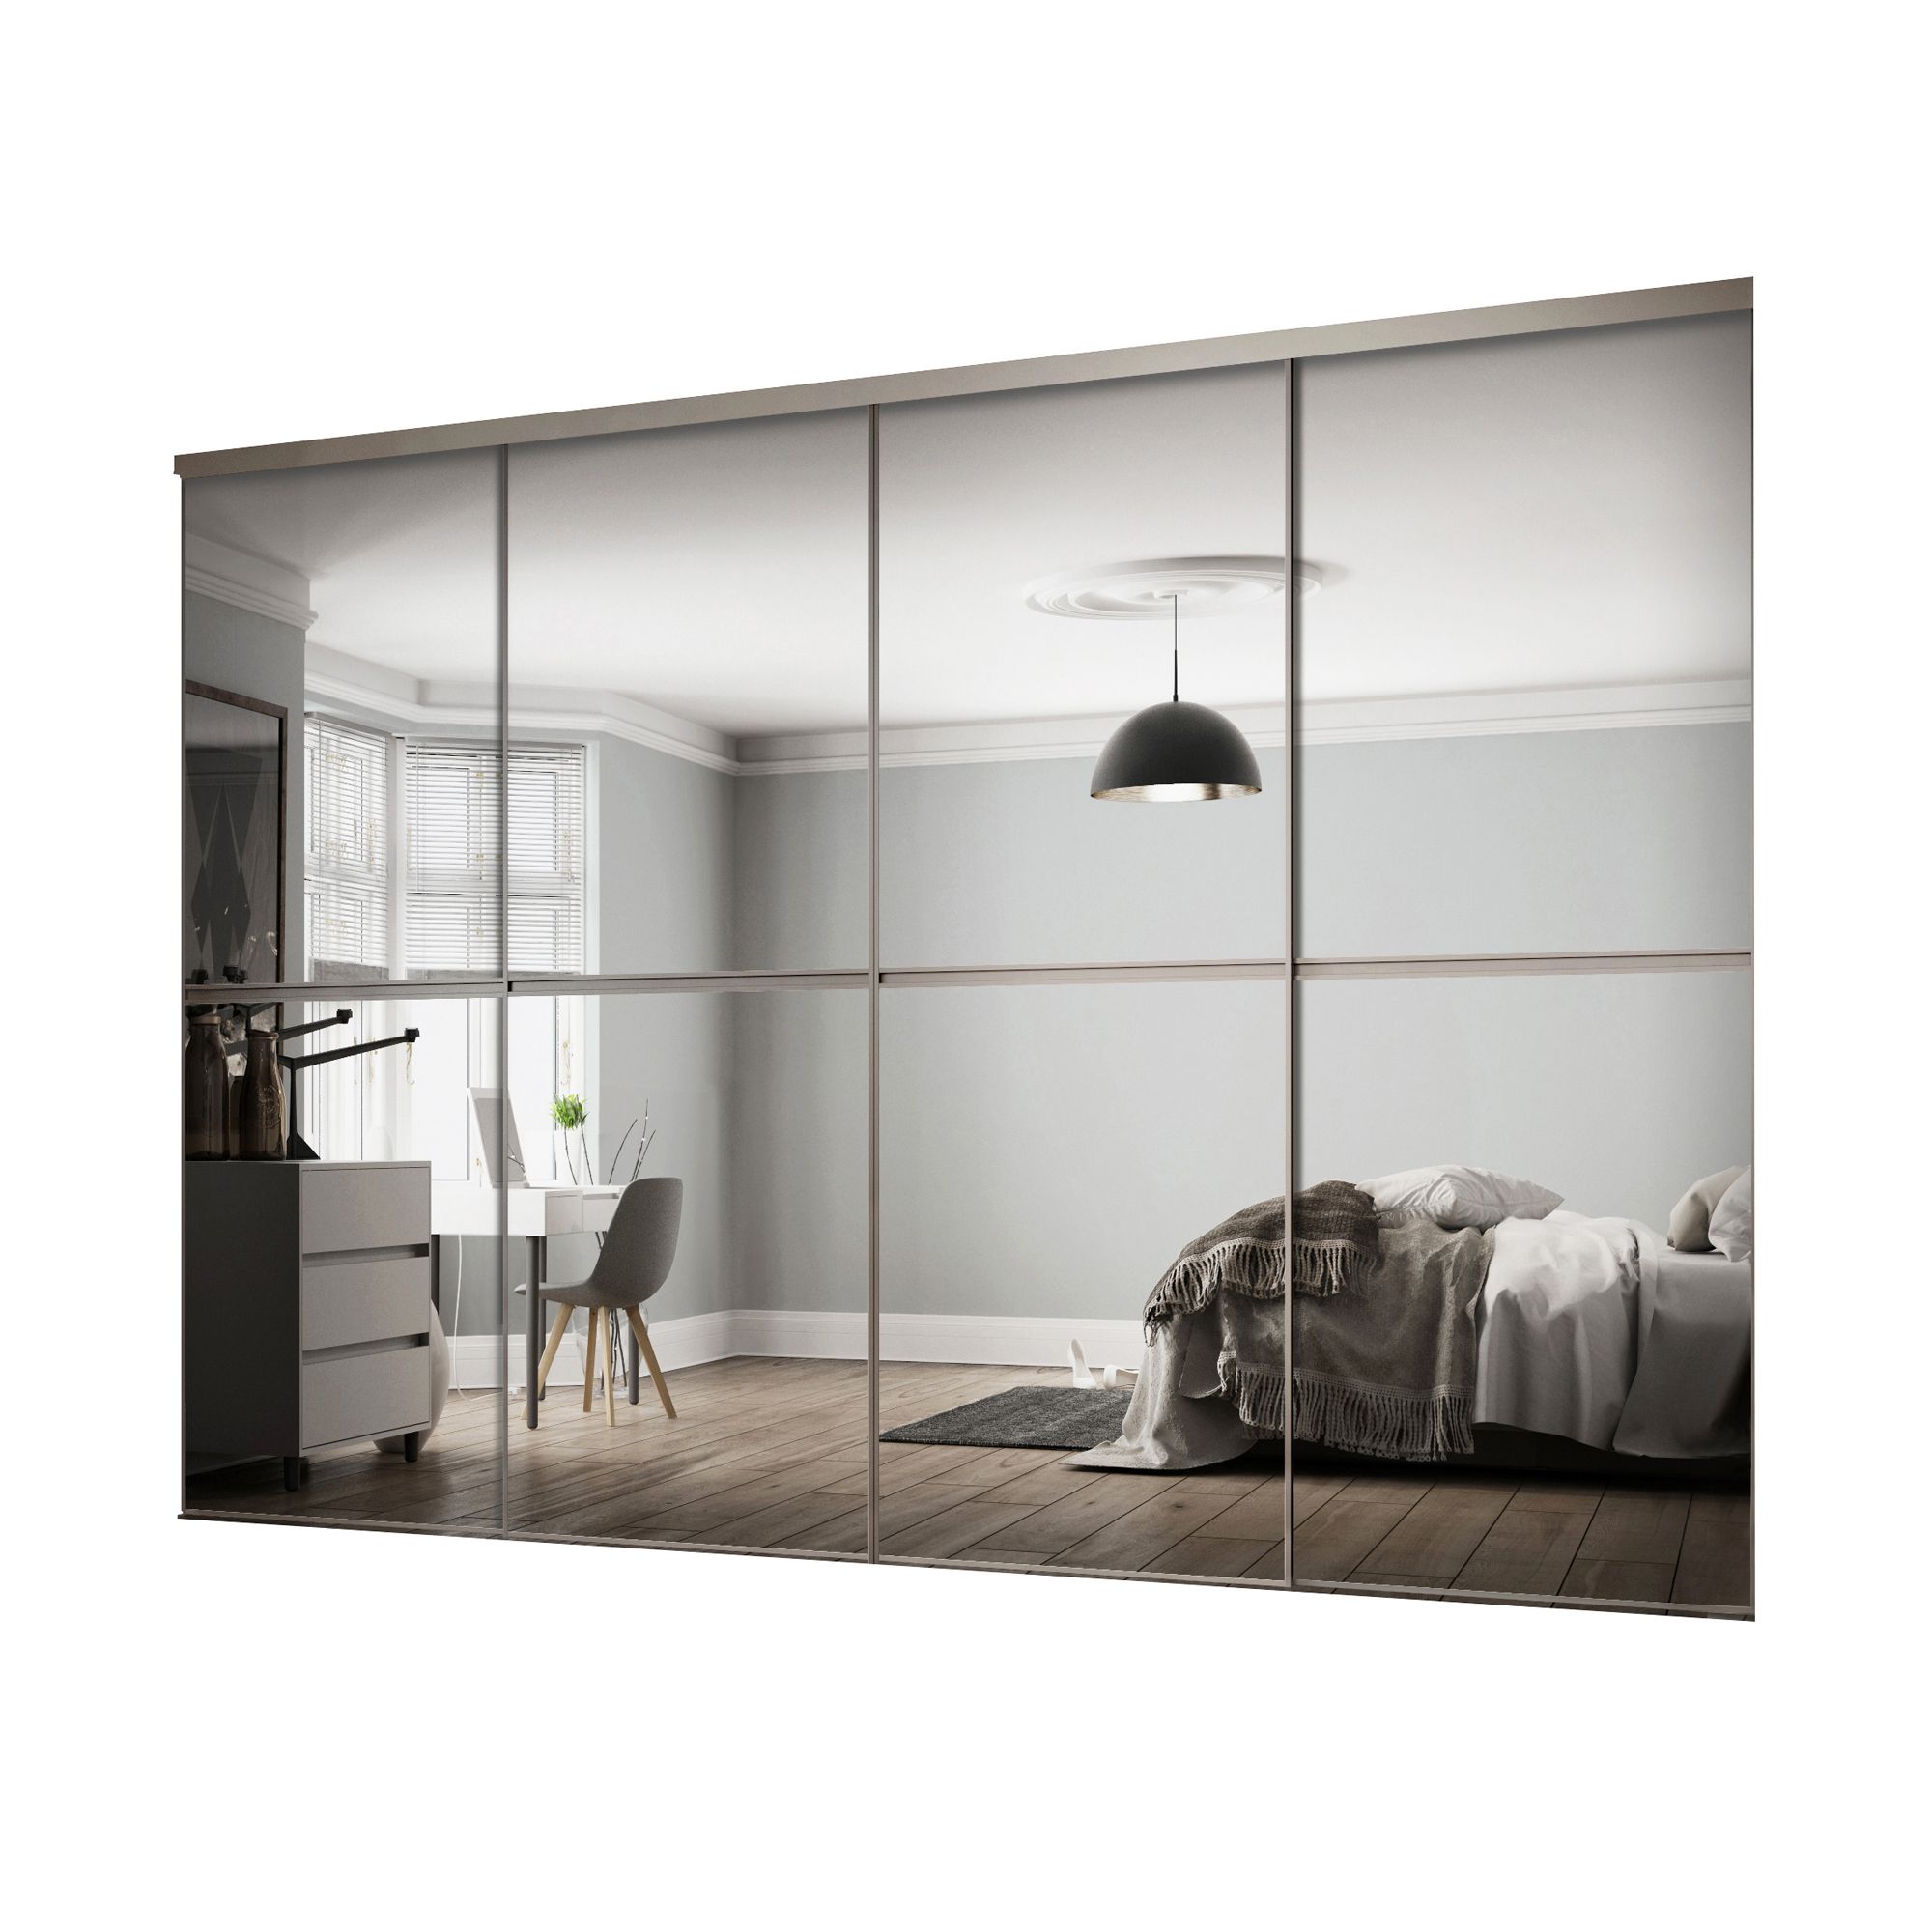 furniture24-eu Wardrobe with Sliding Doors / Bedroom Cabinet